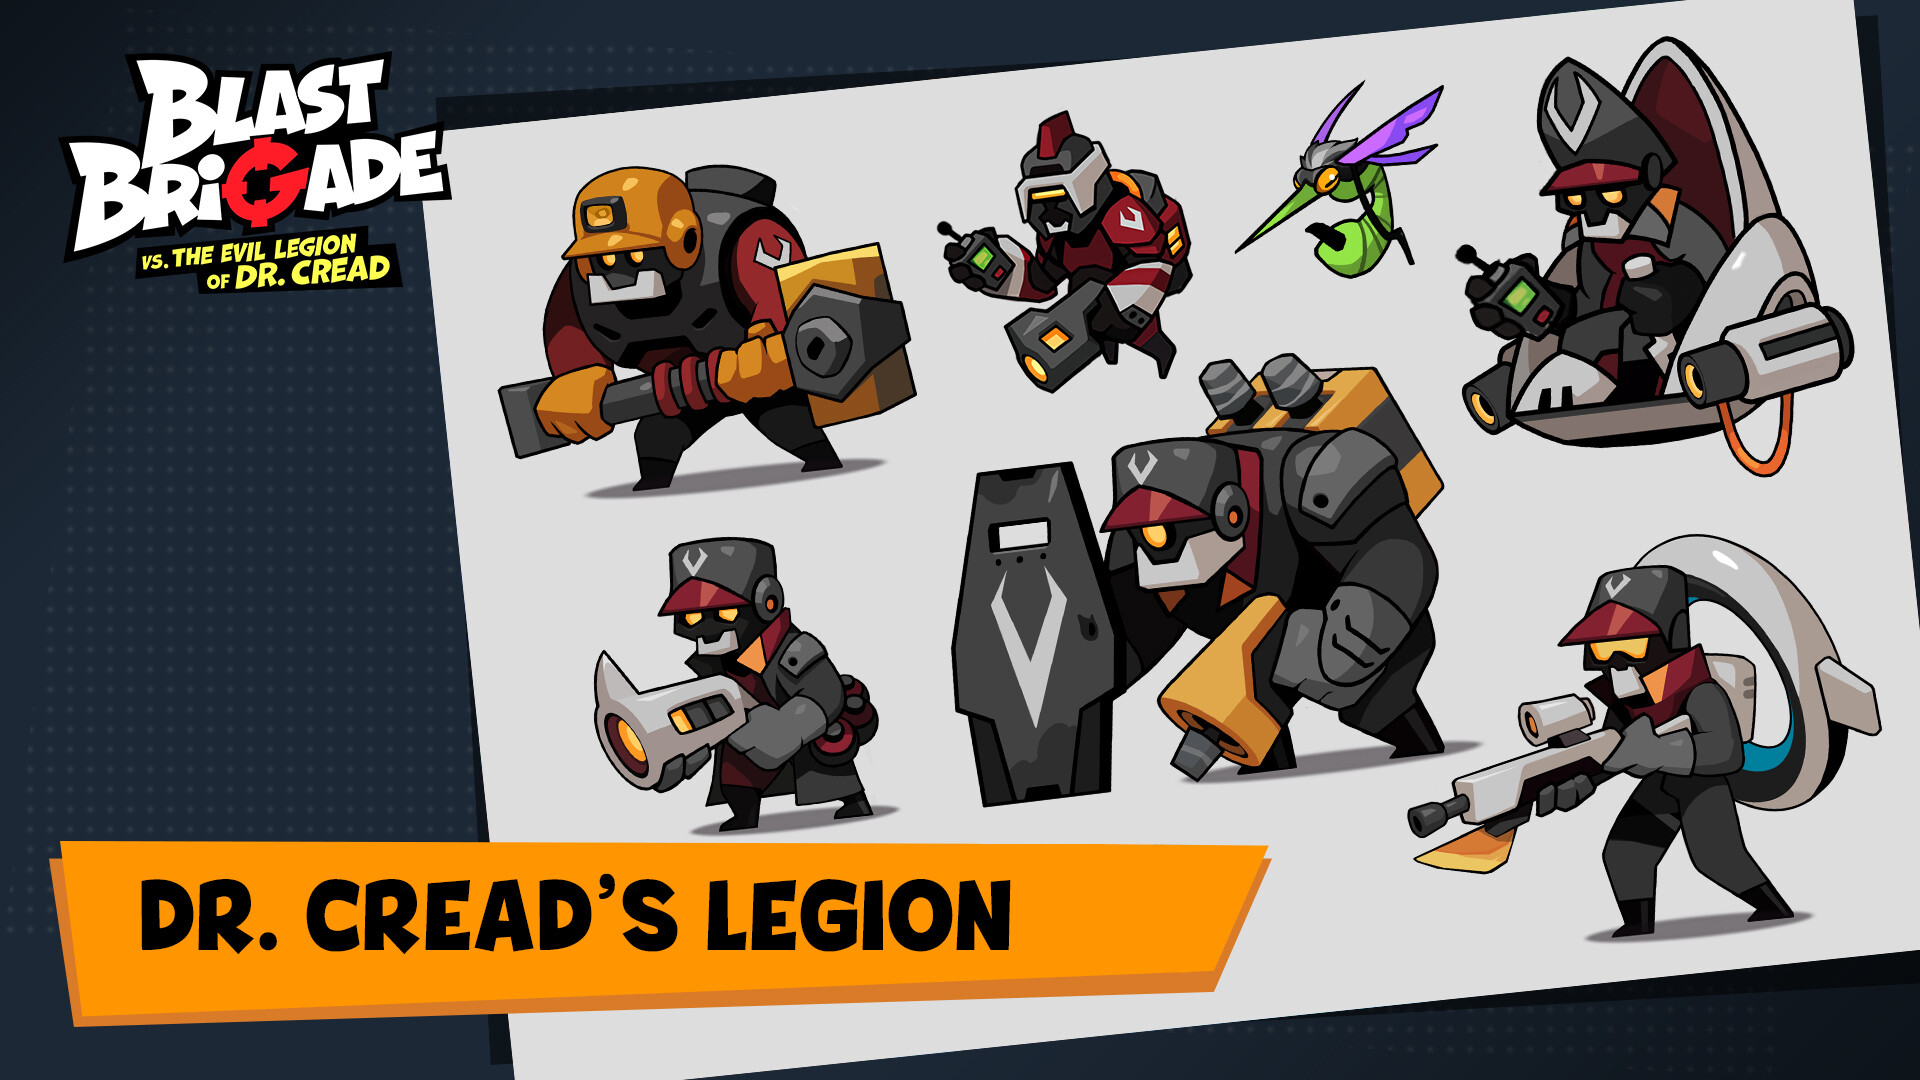 Blast Brigade vs. the Evil Legion of Dr. Cread Wallpapers